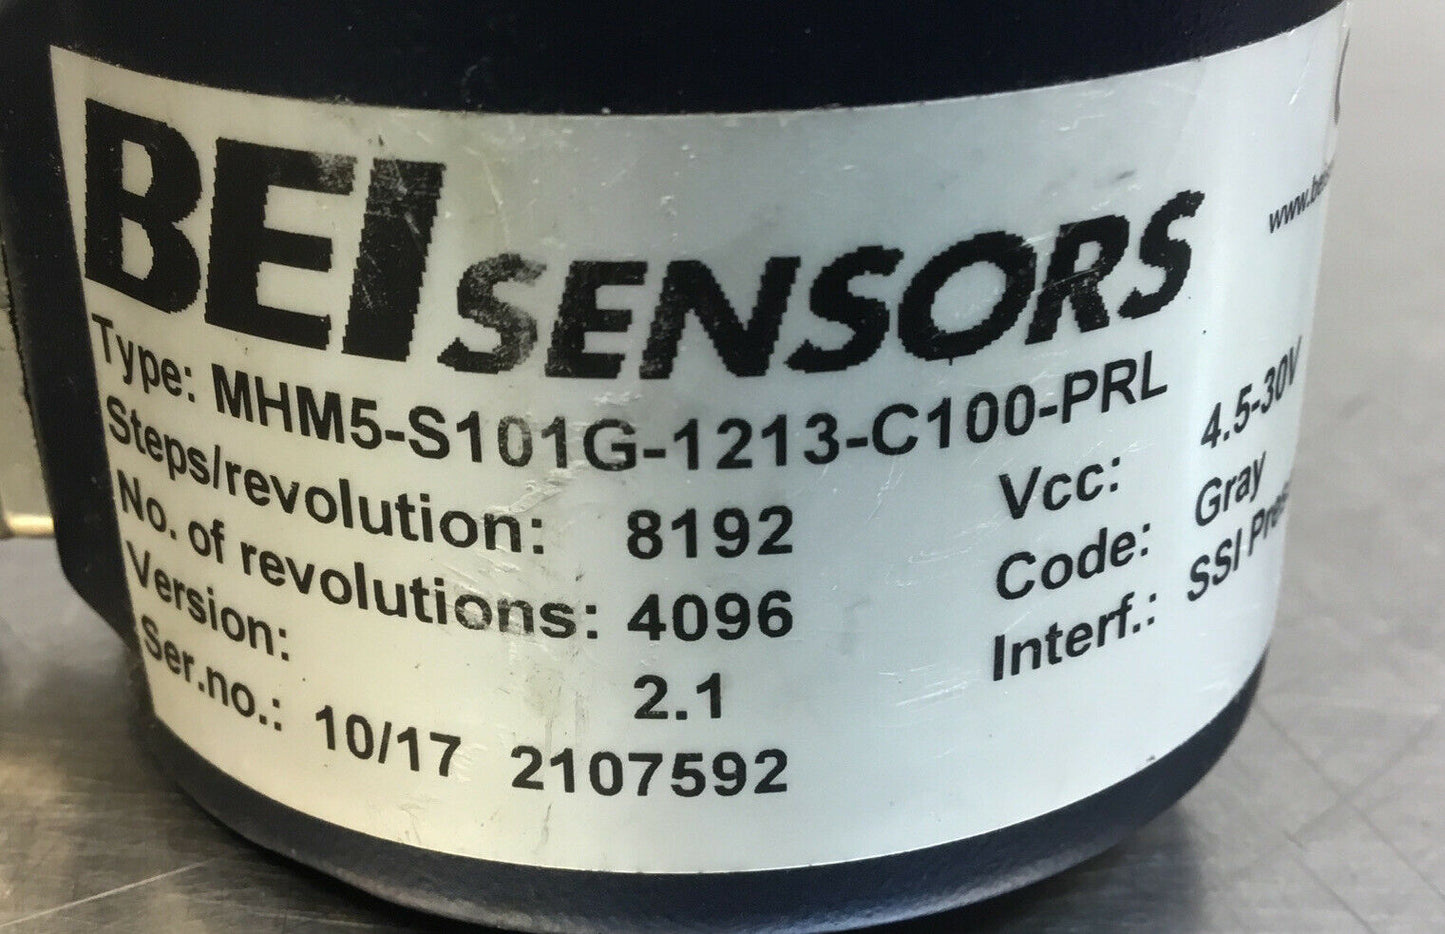 BEI Sensors / Sensata  MHM5-S101G-1213-C100-PRL   4092 RPM. Ver. 2.1.  1D